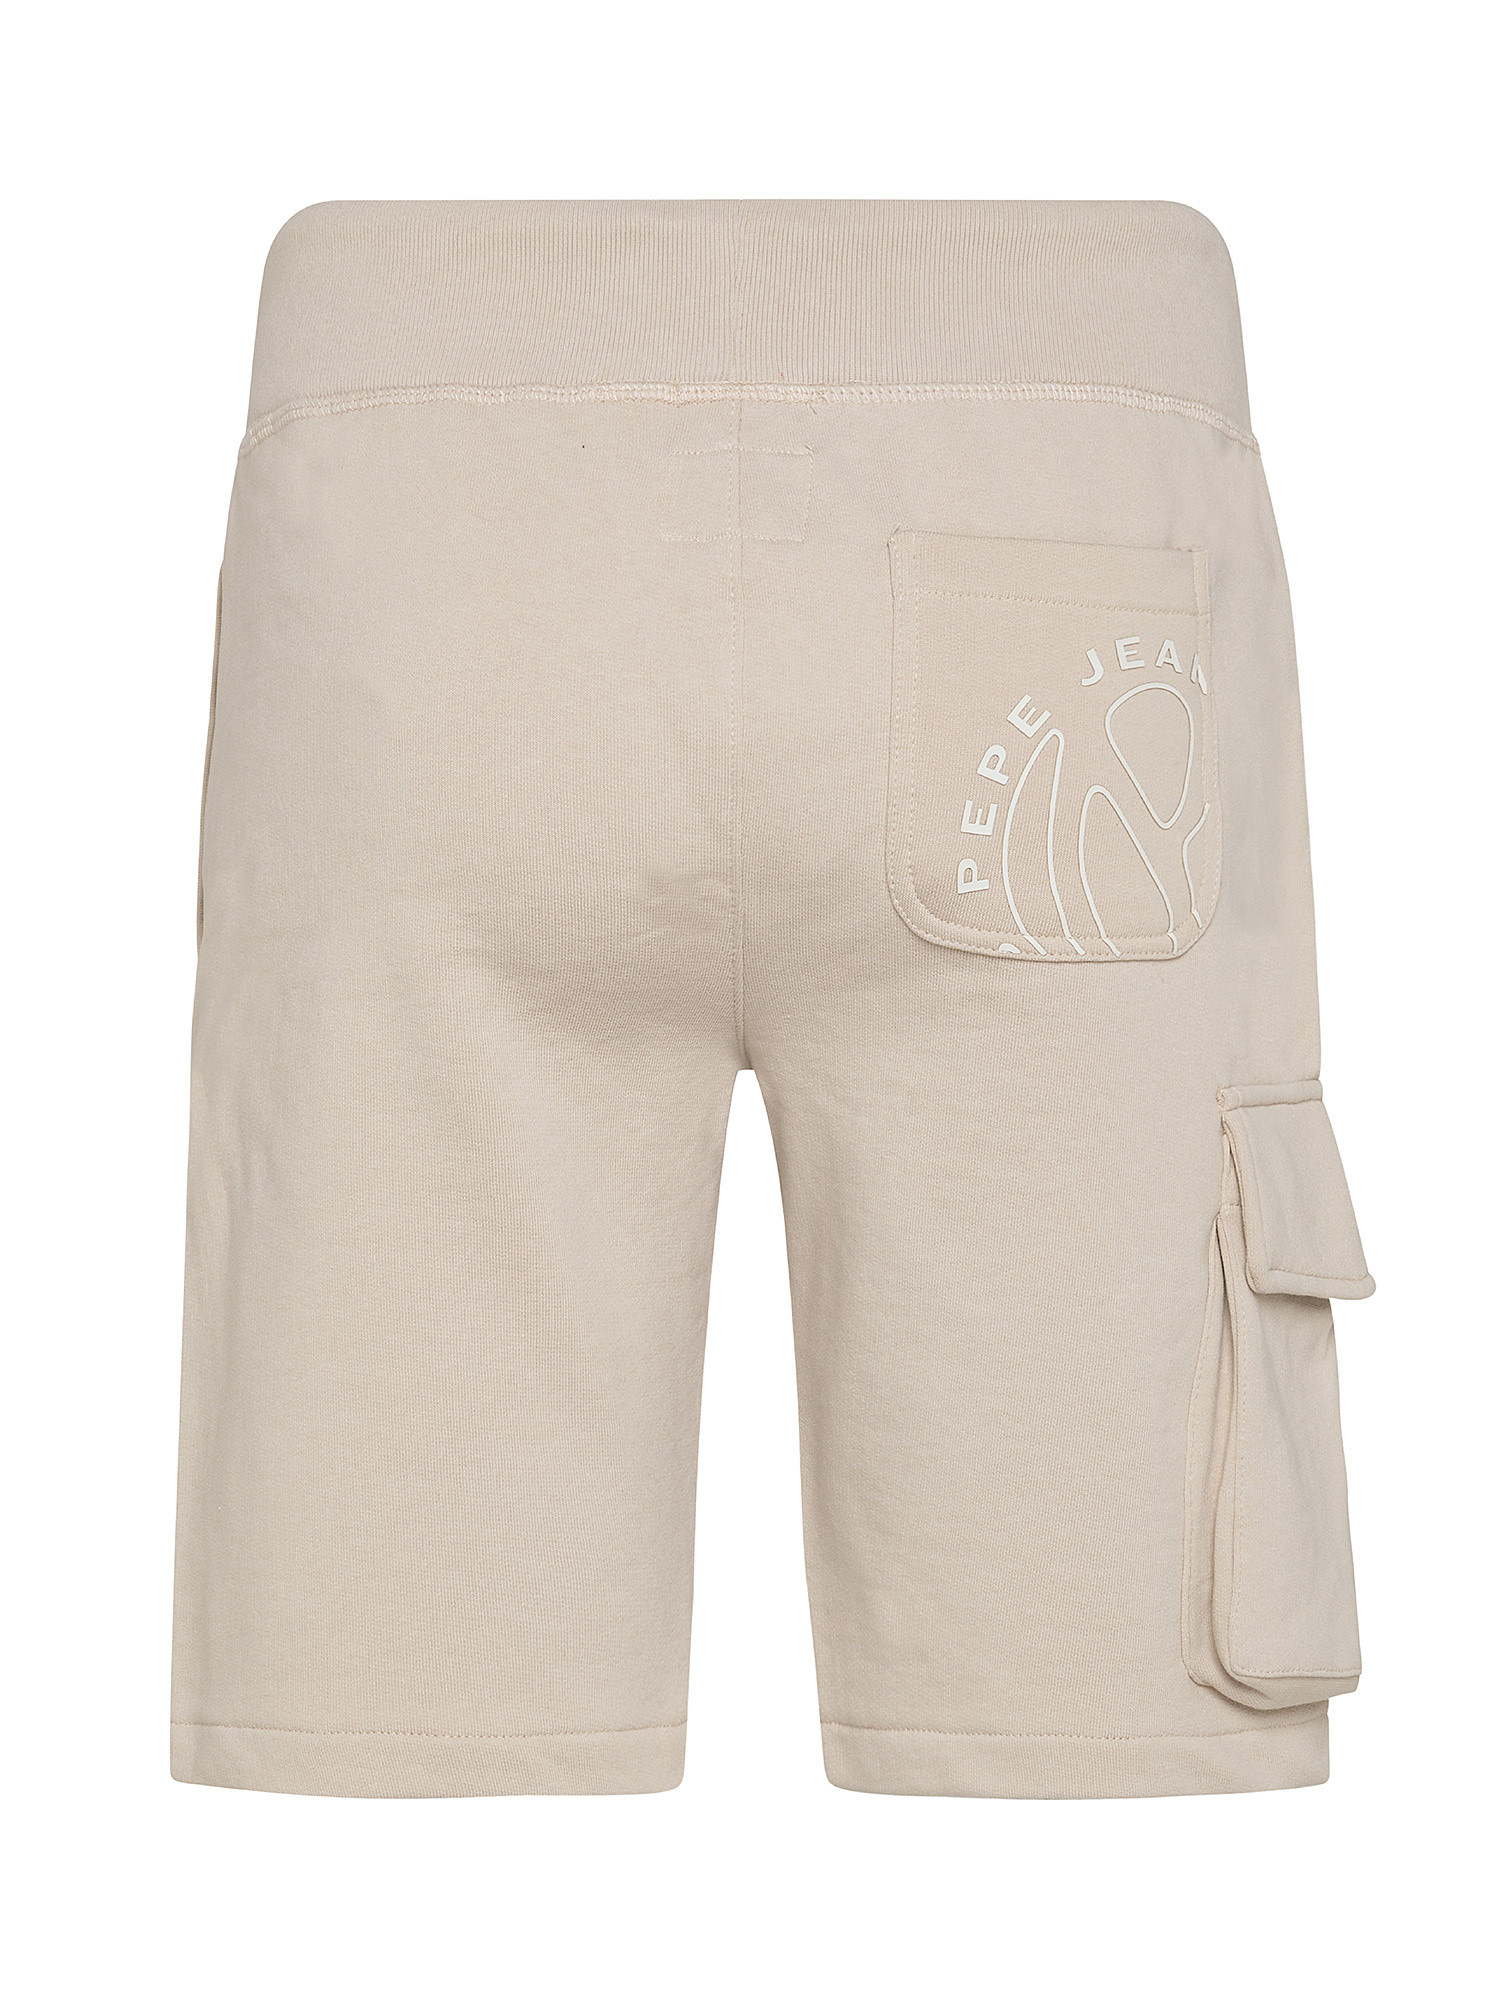 Drake jogger bermuda shorts, Beige, large image number 1